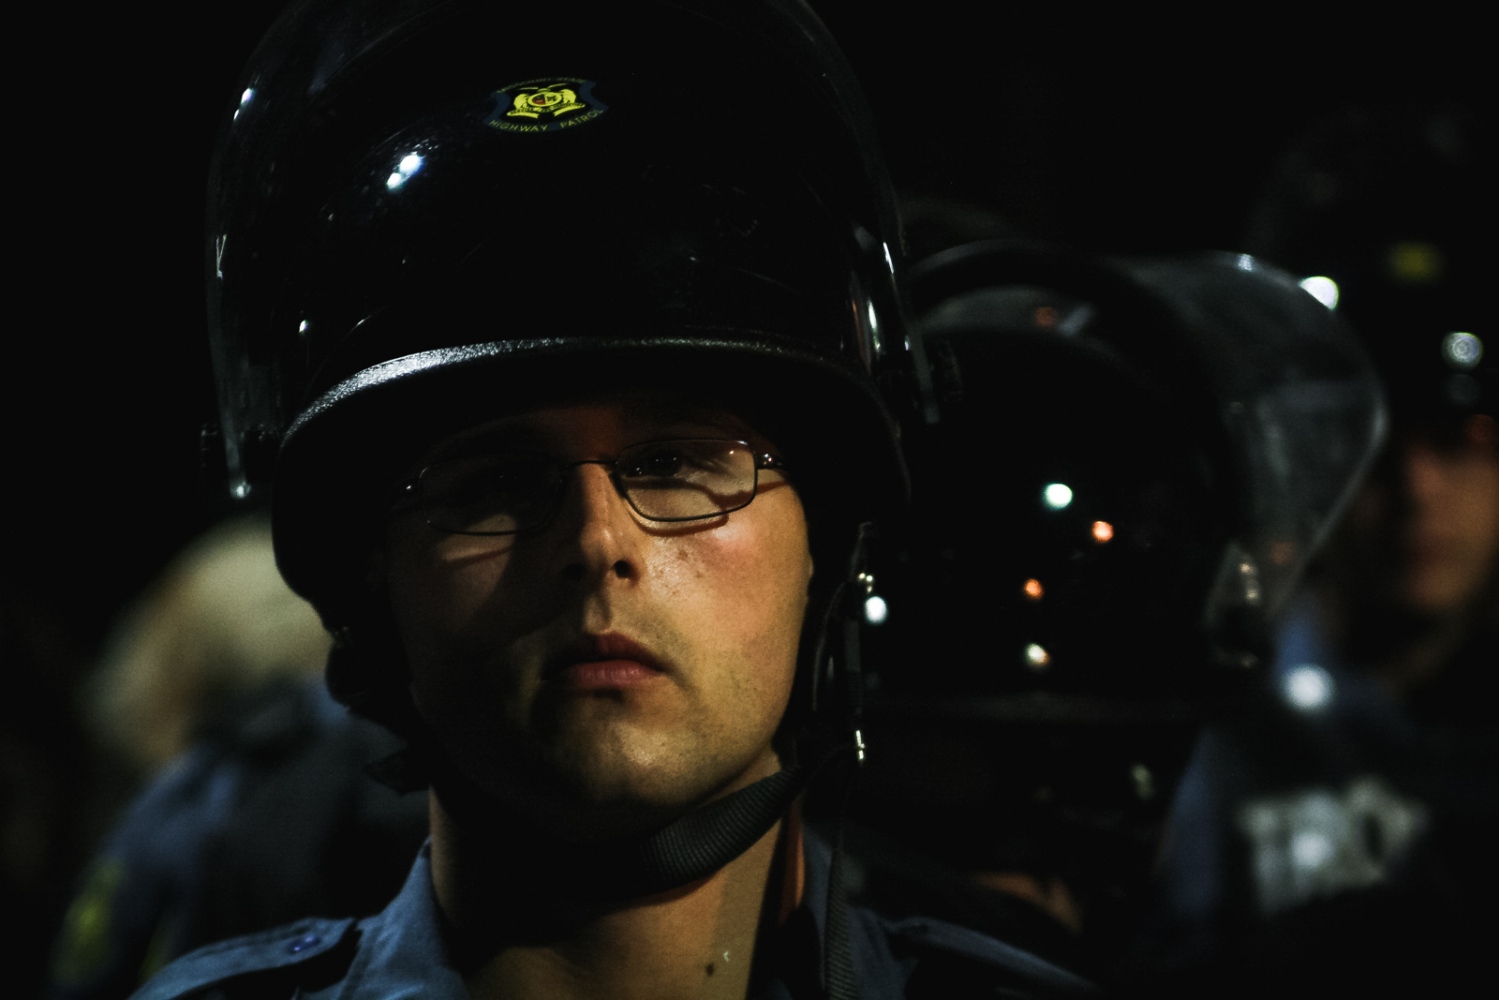 Ferguson October - A Ferguson police officer in riot gear stands in...